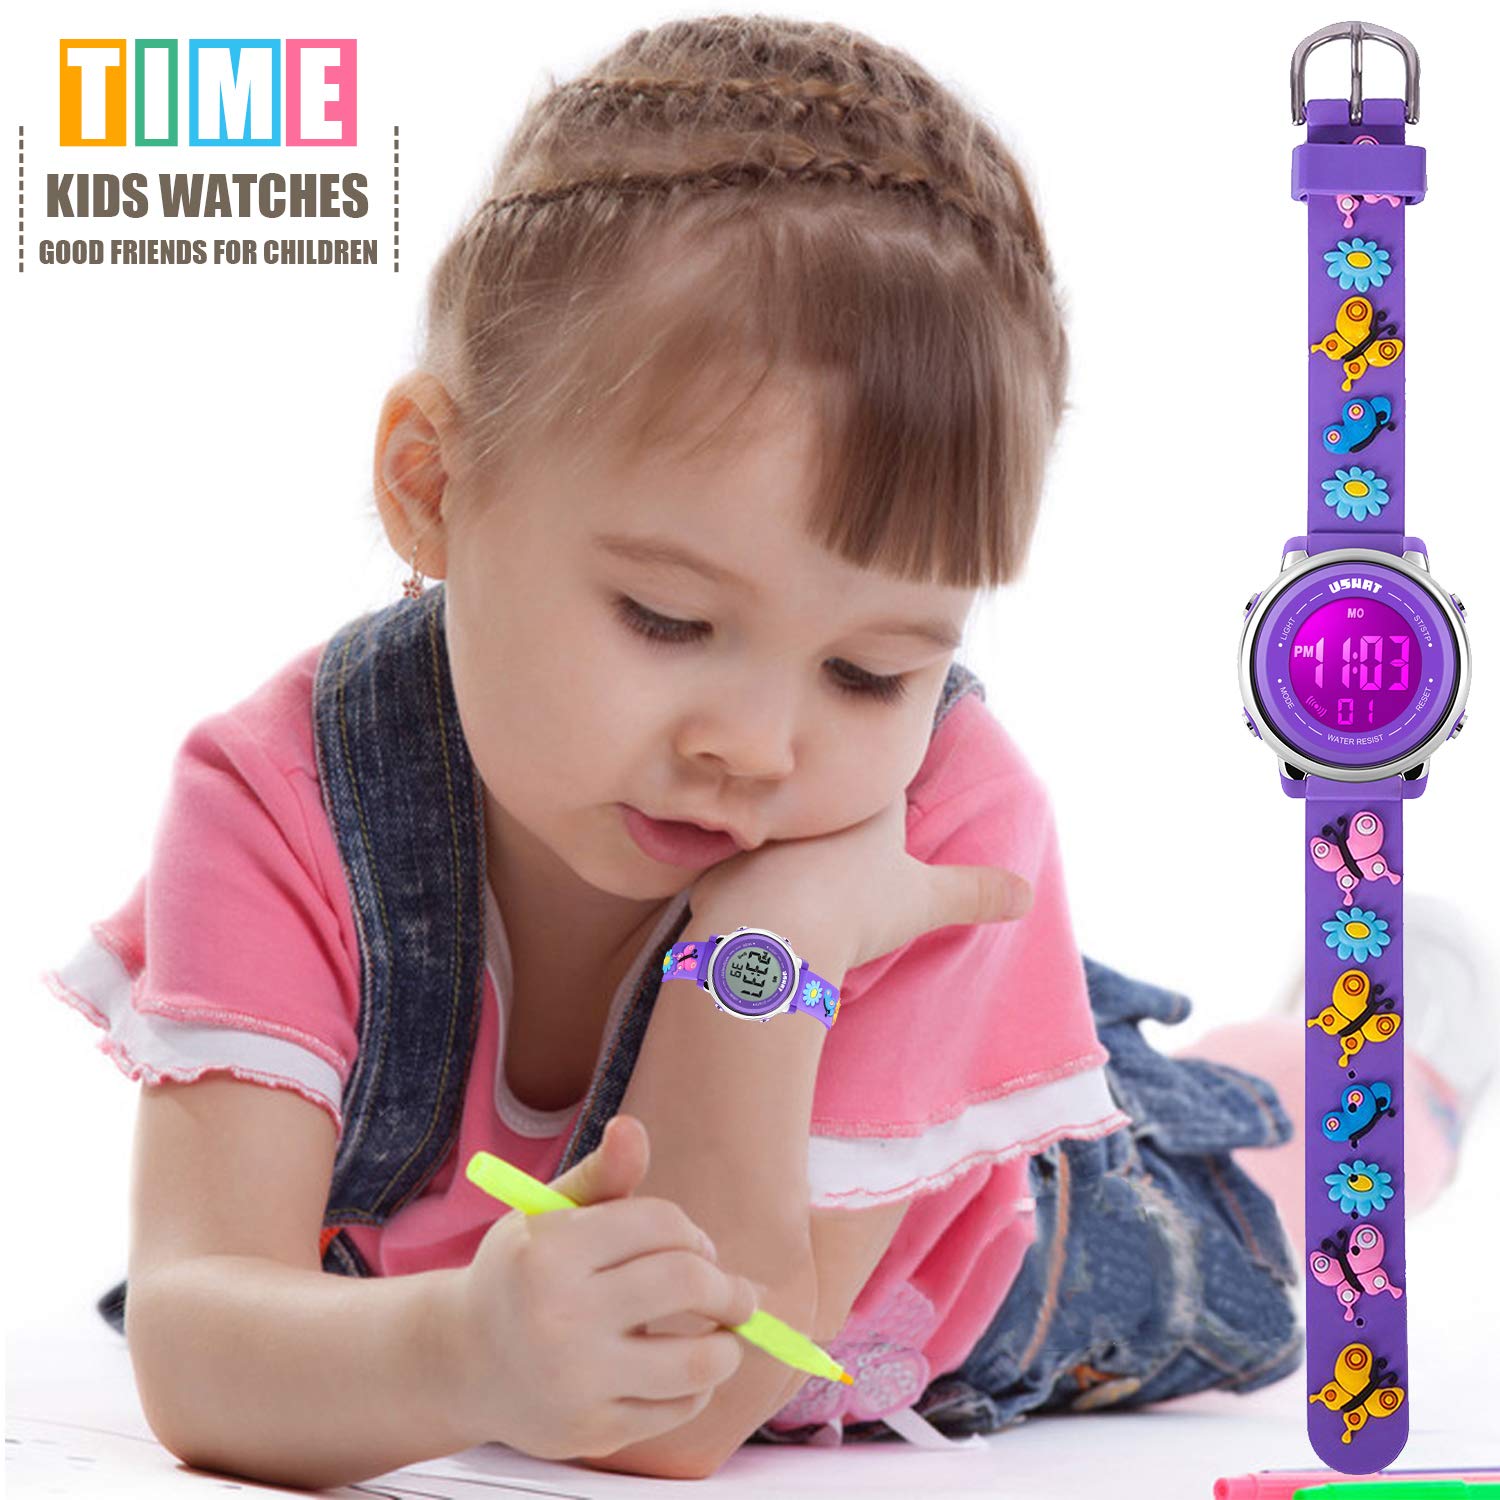 USWAT Kids Watch 3D Cartoon Toddler Wrist Digital Watch Waterproof 7 Color Lights with Alarm Stopwatch for 3-10 Year Boys Girls Little Child